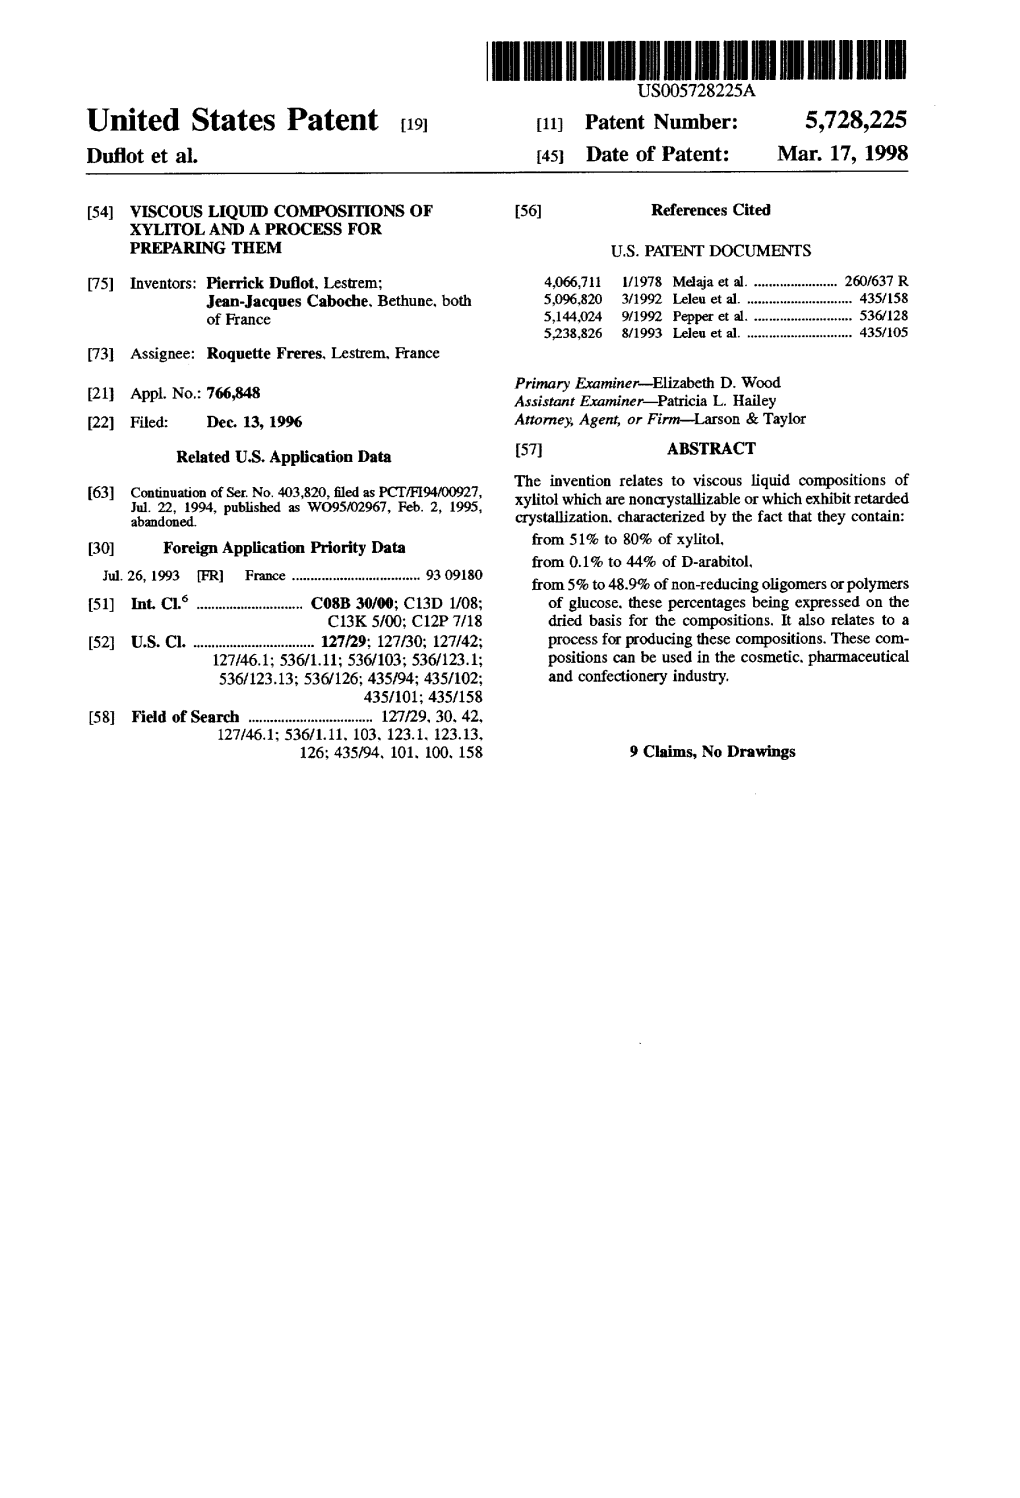 United States Patent (19) 11 Patent Number: 5,728,225 Duflot Et Al